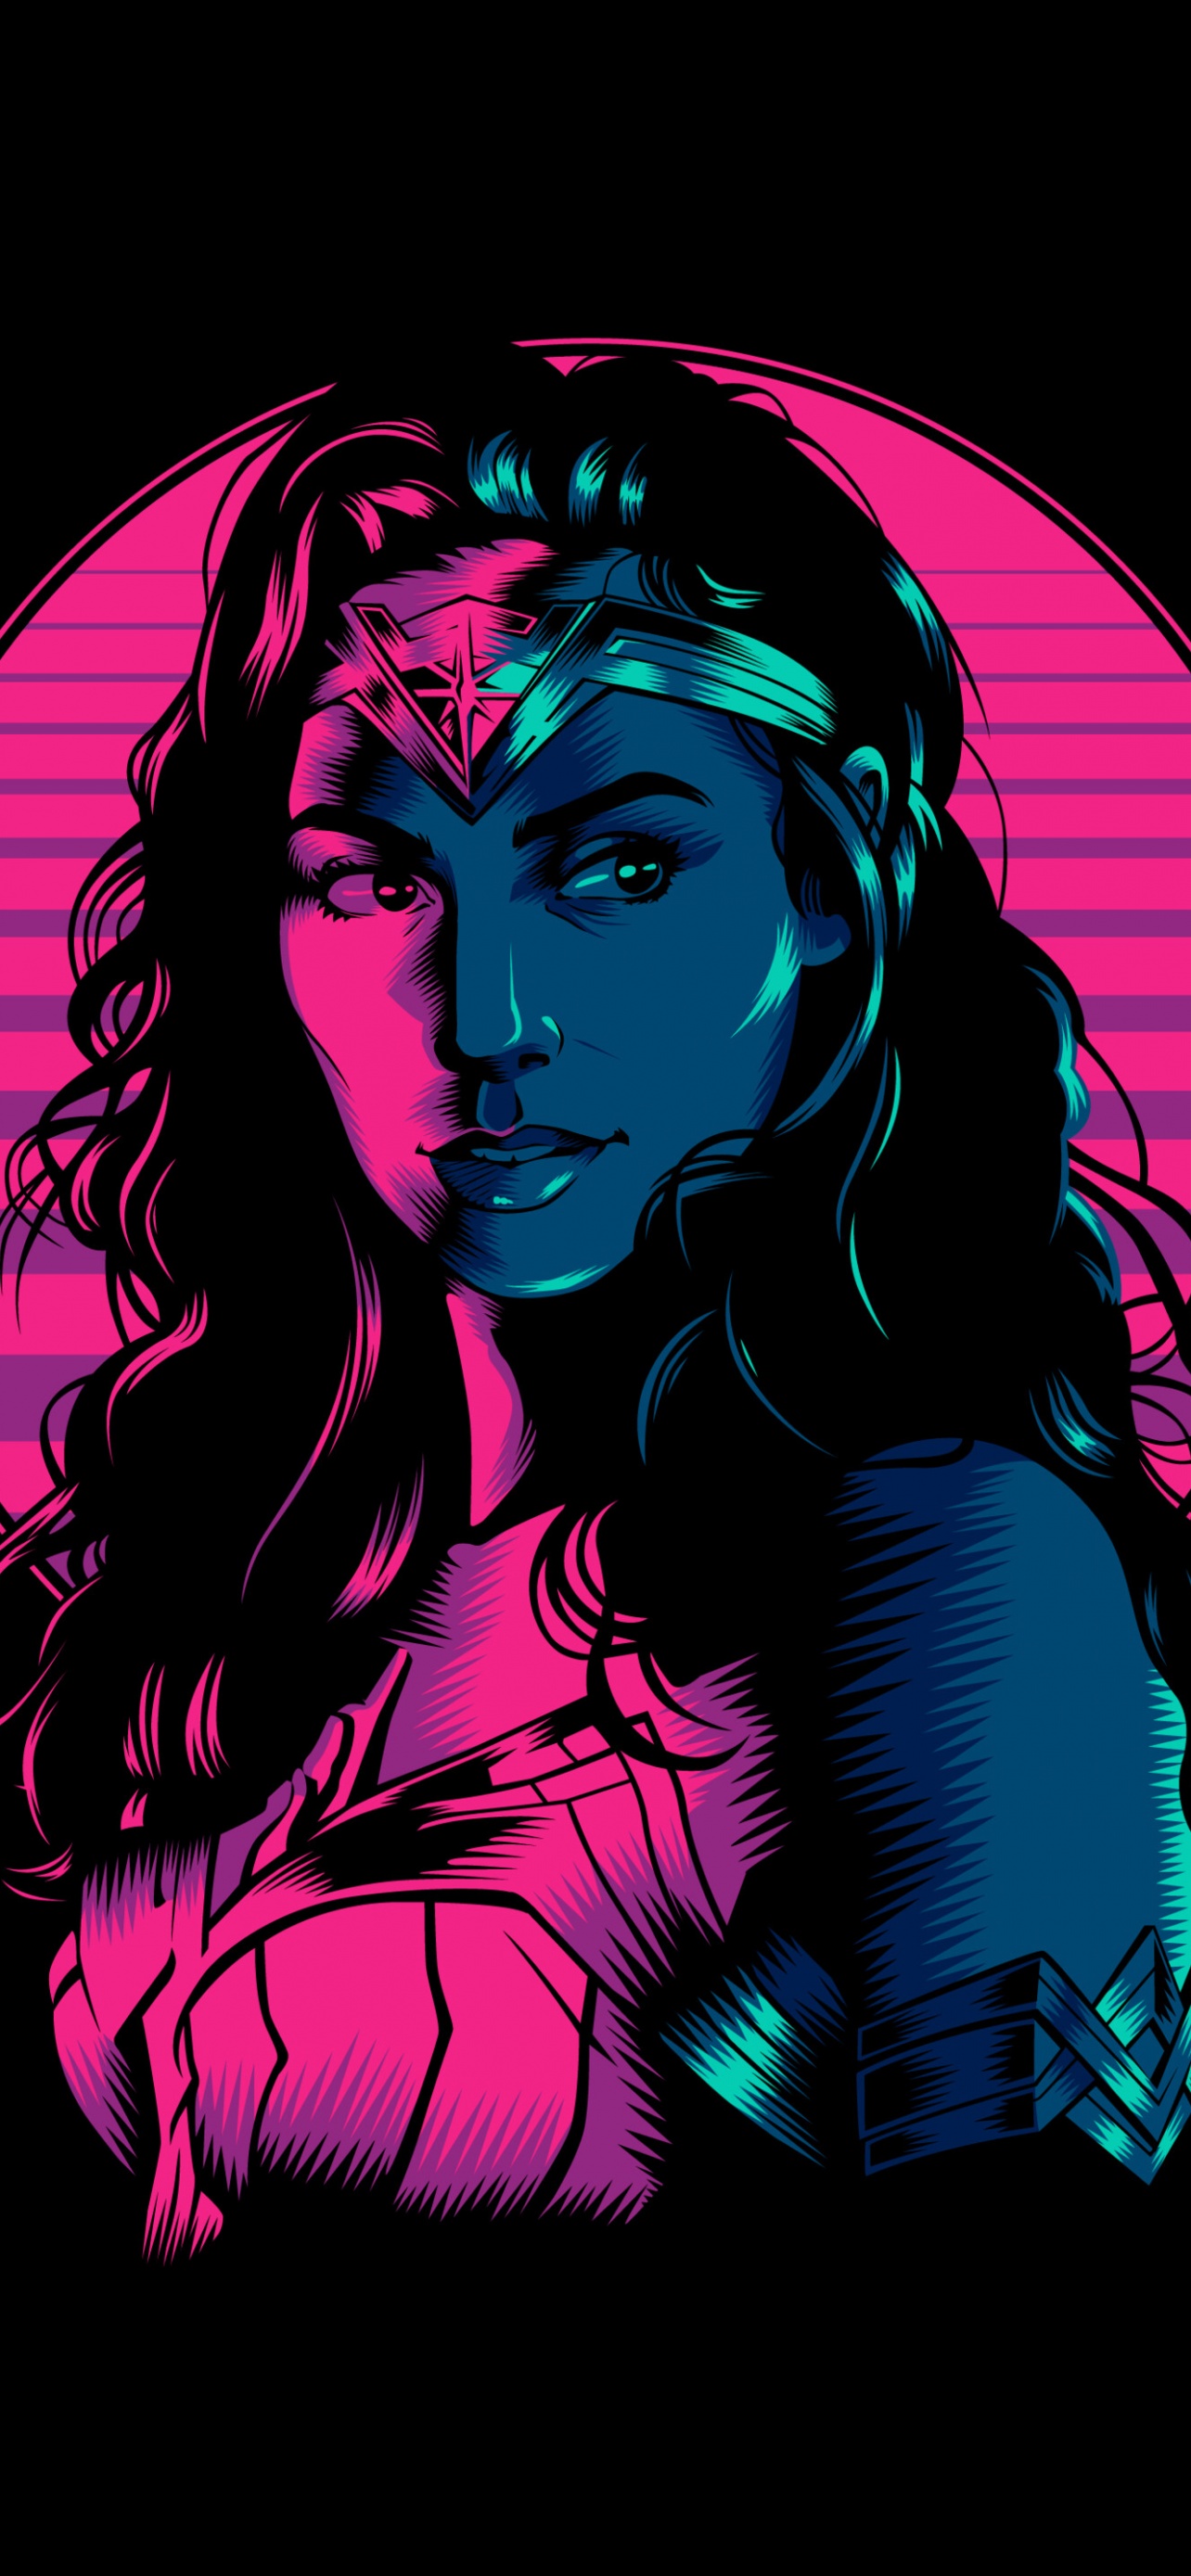 Wonder Woman 1984 Wallpaper 4K, Wonder Woman, Fan Art, Black background, Neon, Graphics CGI